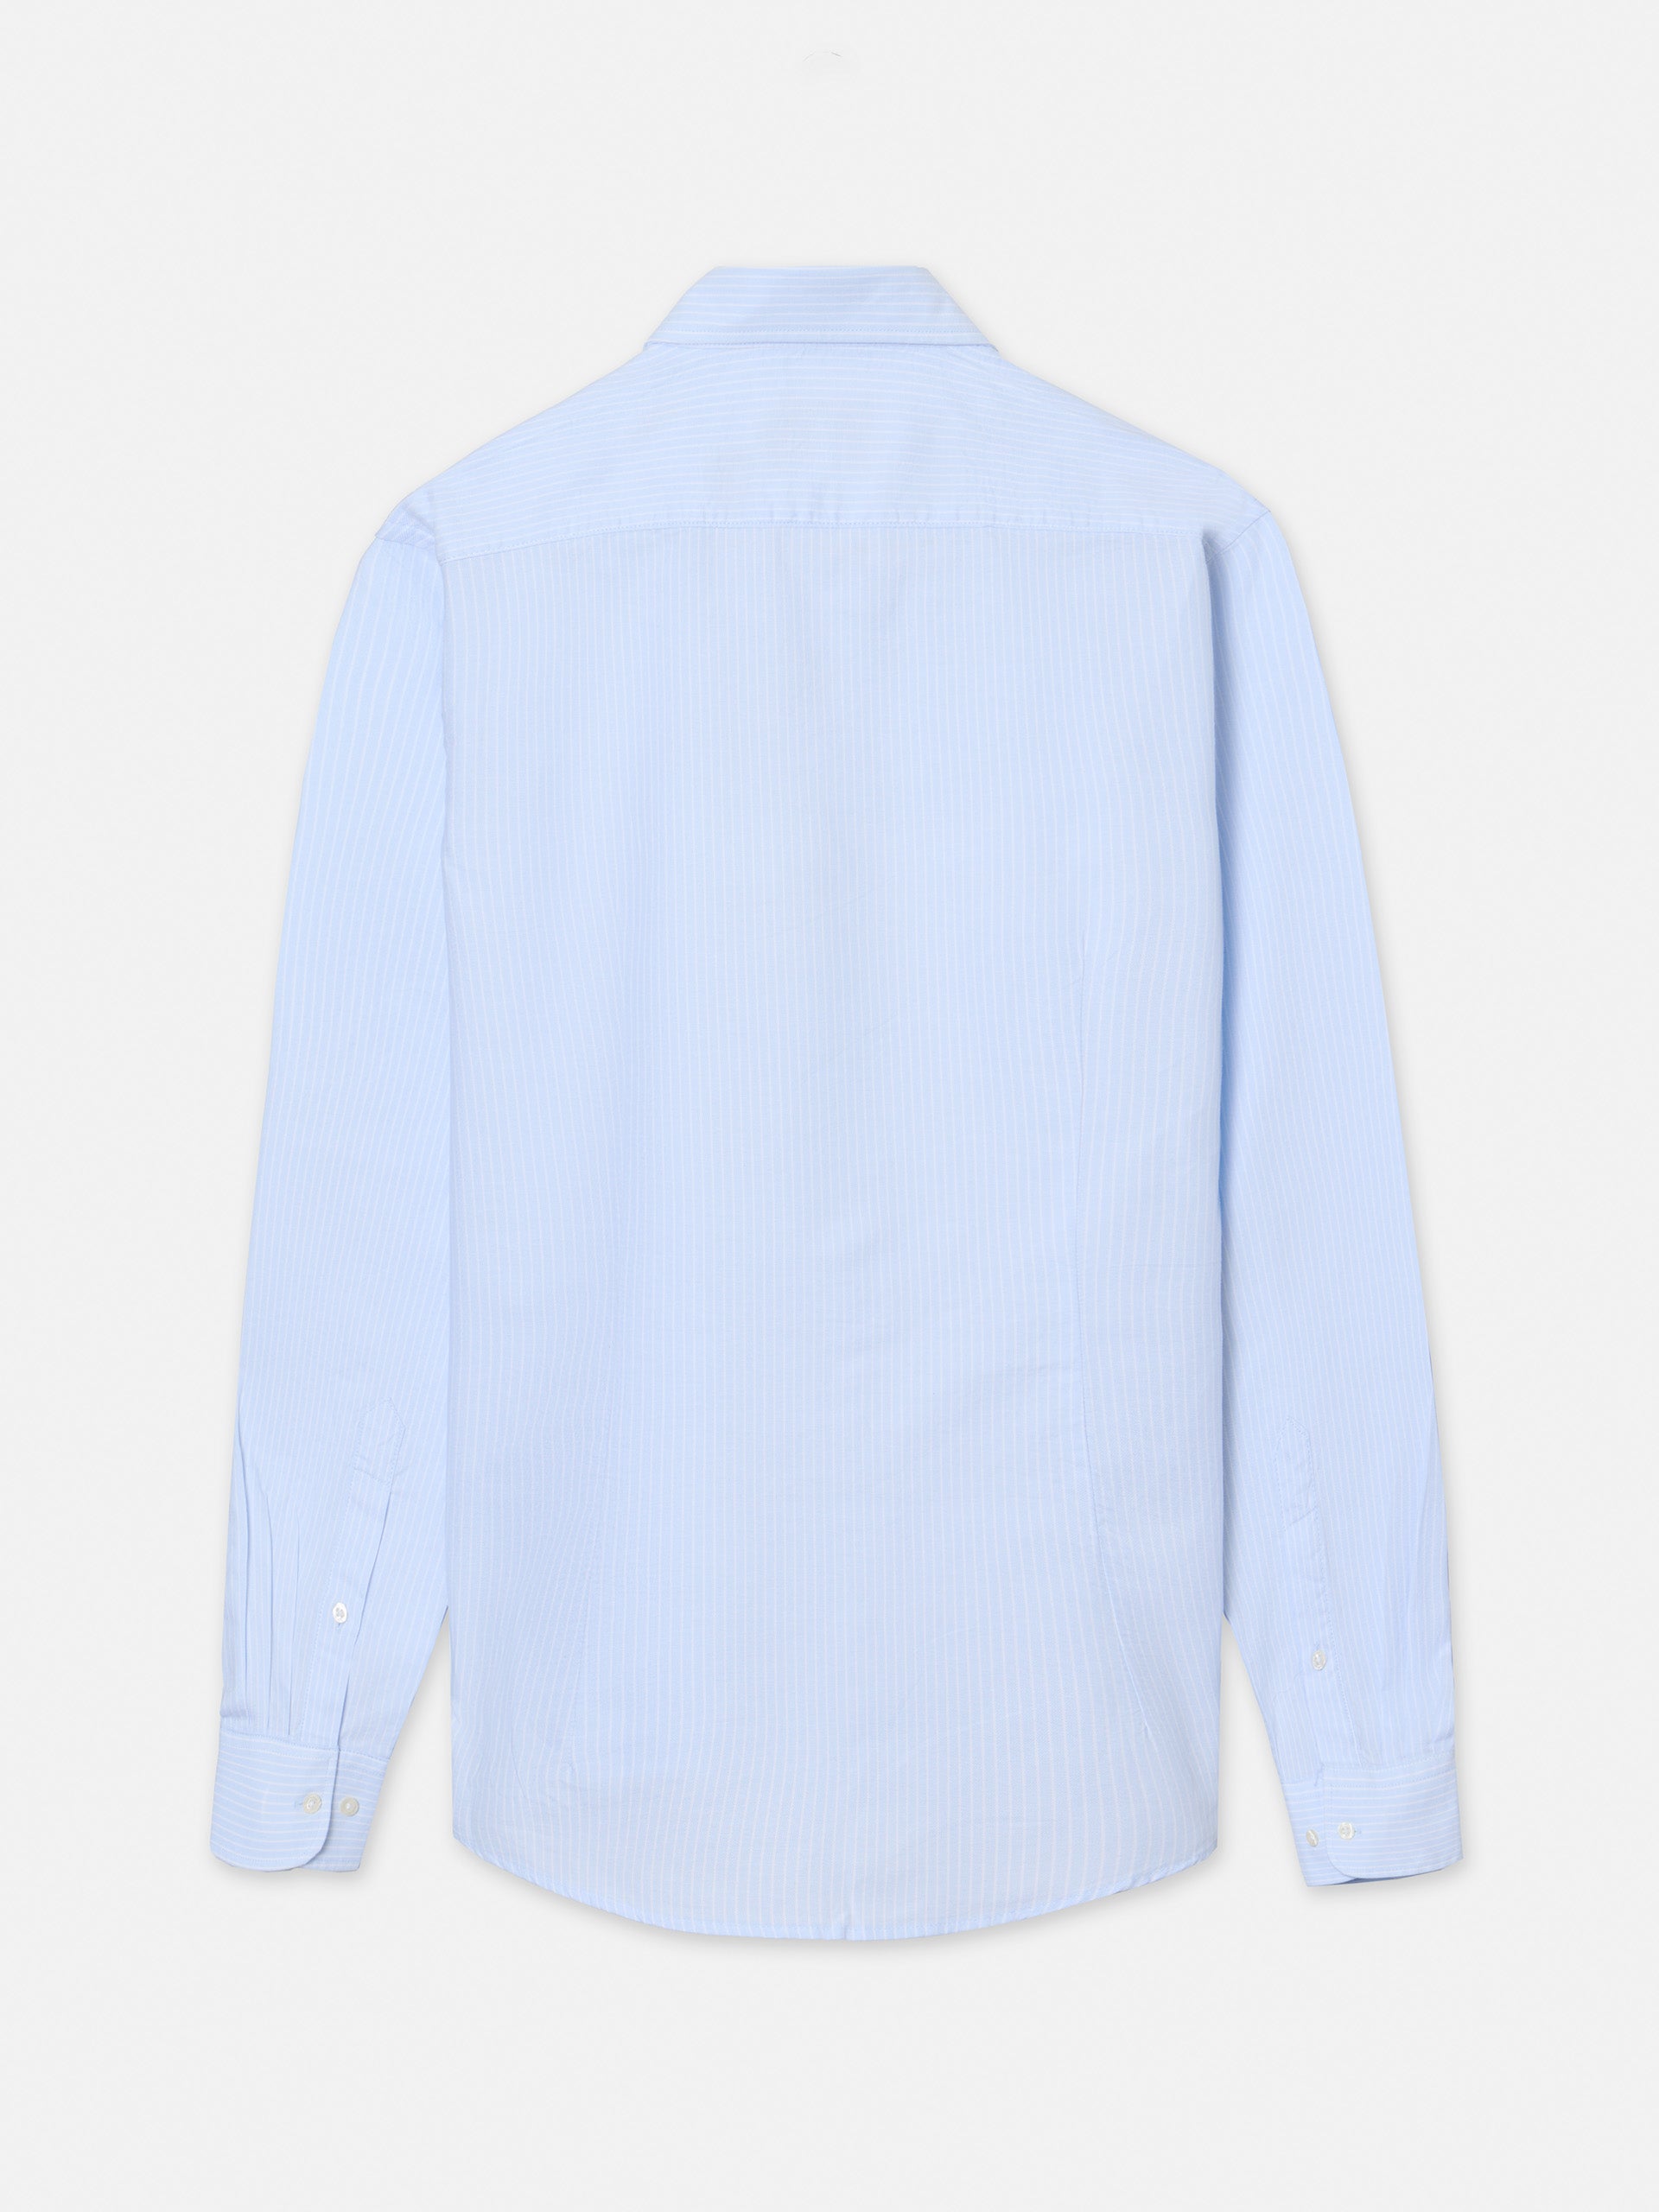 Camisa sport oxford raya fina blanca celeste